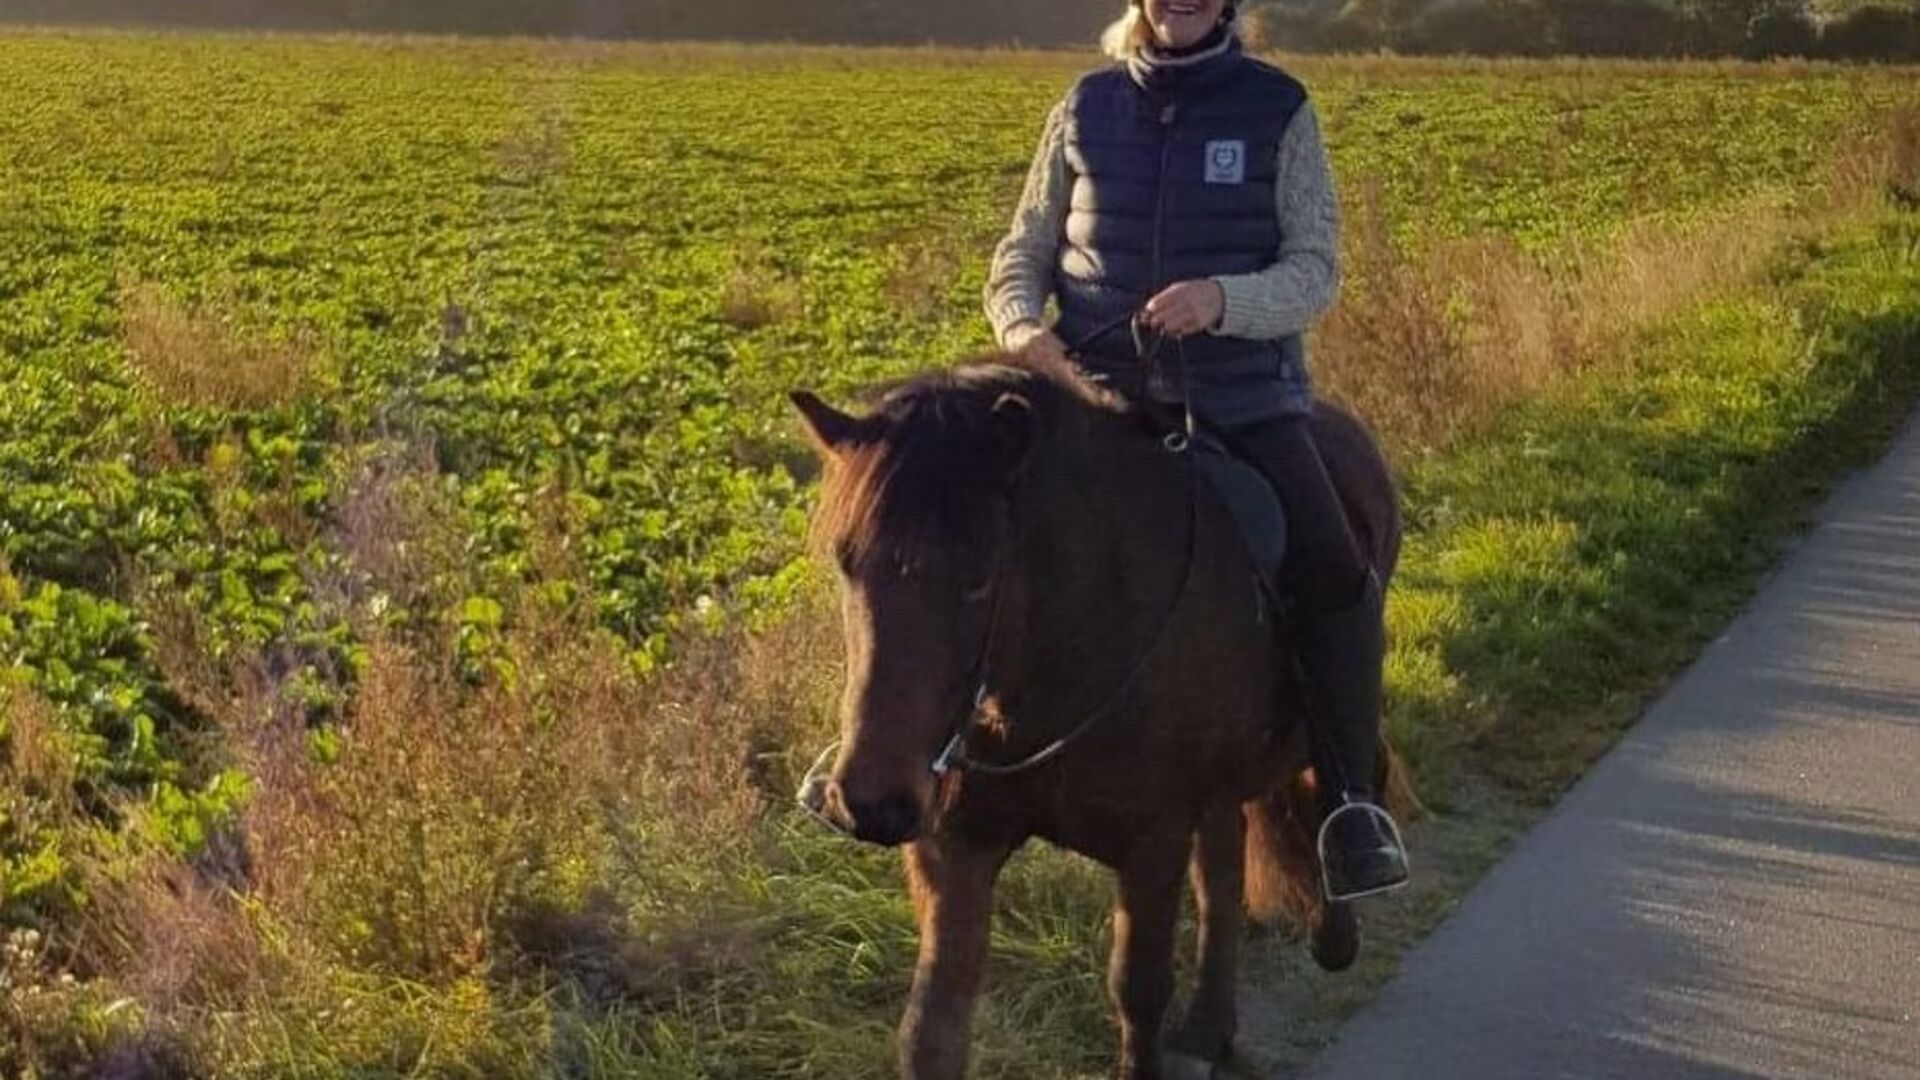 Joan har været frivillig i Dyrenes Beskyttelse siden 2014. Her ridder hun på sin hest Hannibal. 